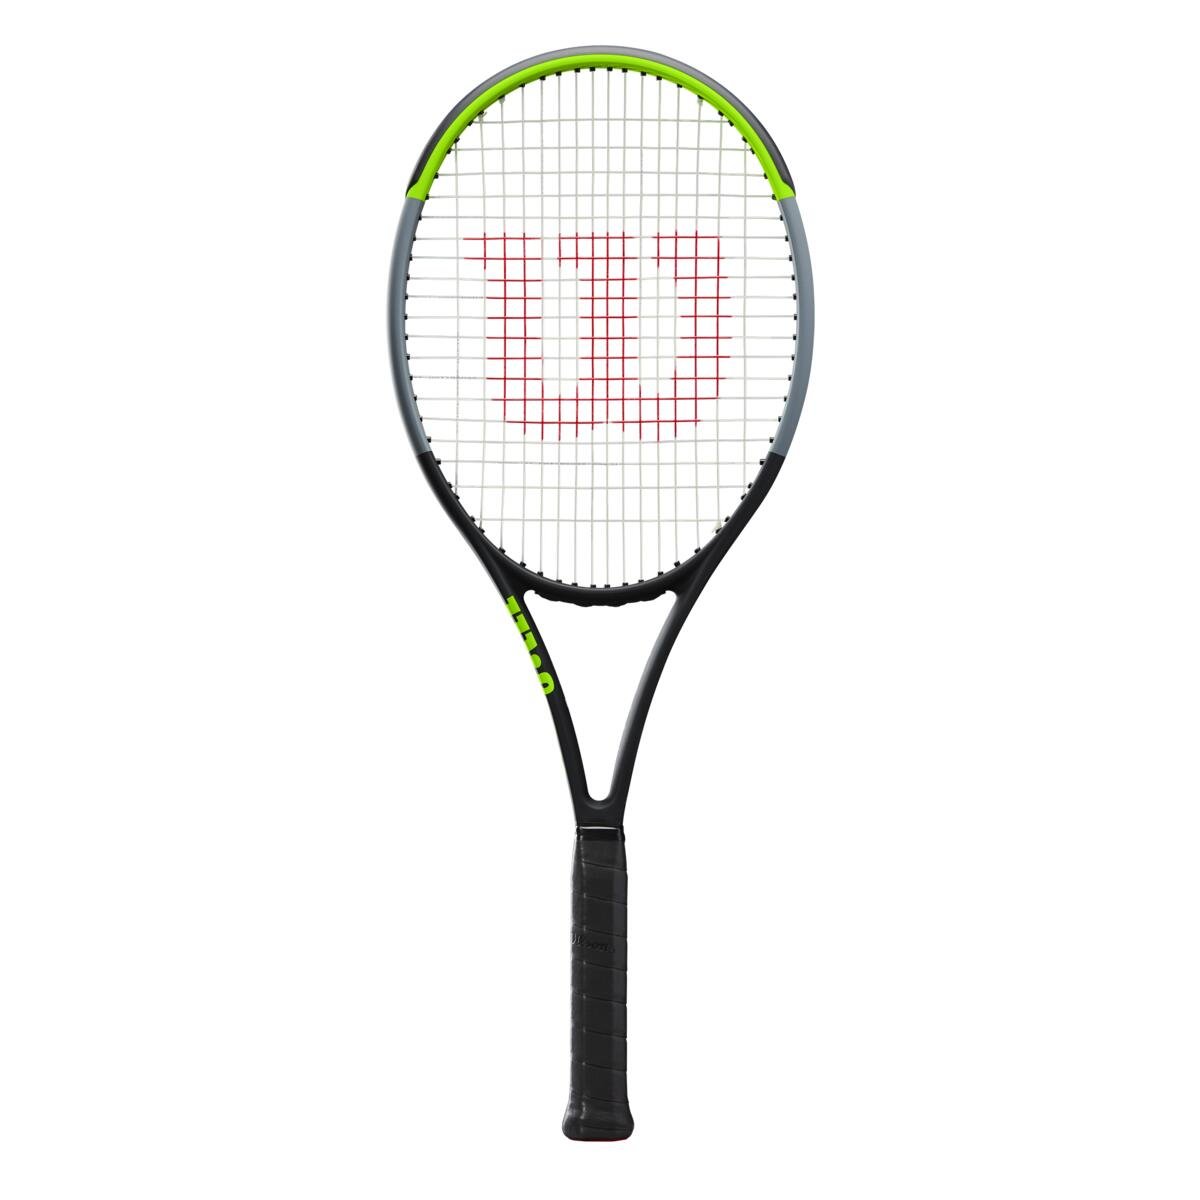 Теннисная ракетка Wilson Blade 100ul v7.0, арт. Wr014110